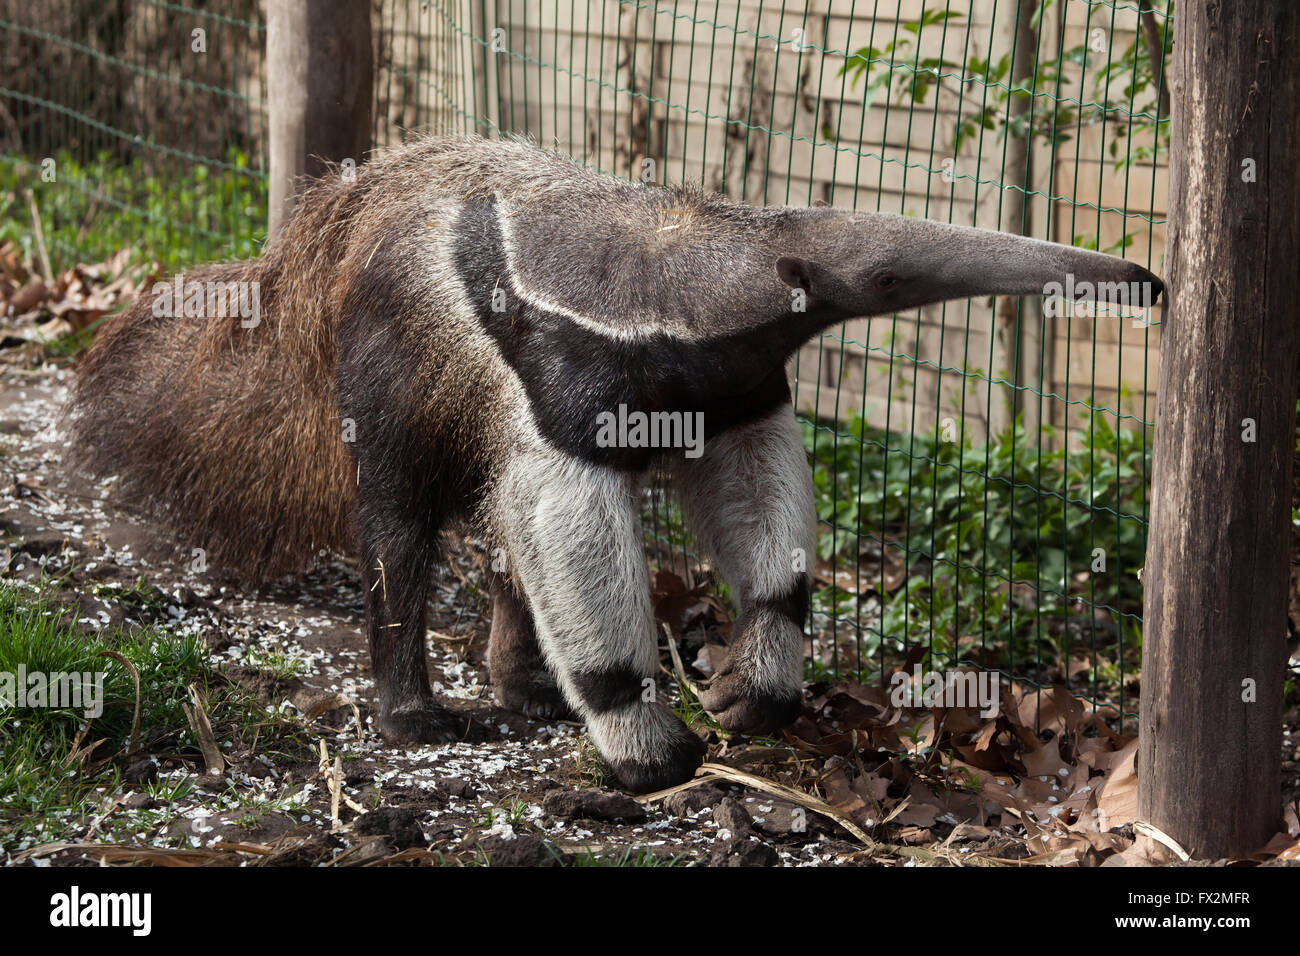 Giant anteater (Myrmecophaga tridactyla), noto anche come la formica portano a Budapest Zoo in Budapest, Ungheria. Foto Stock